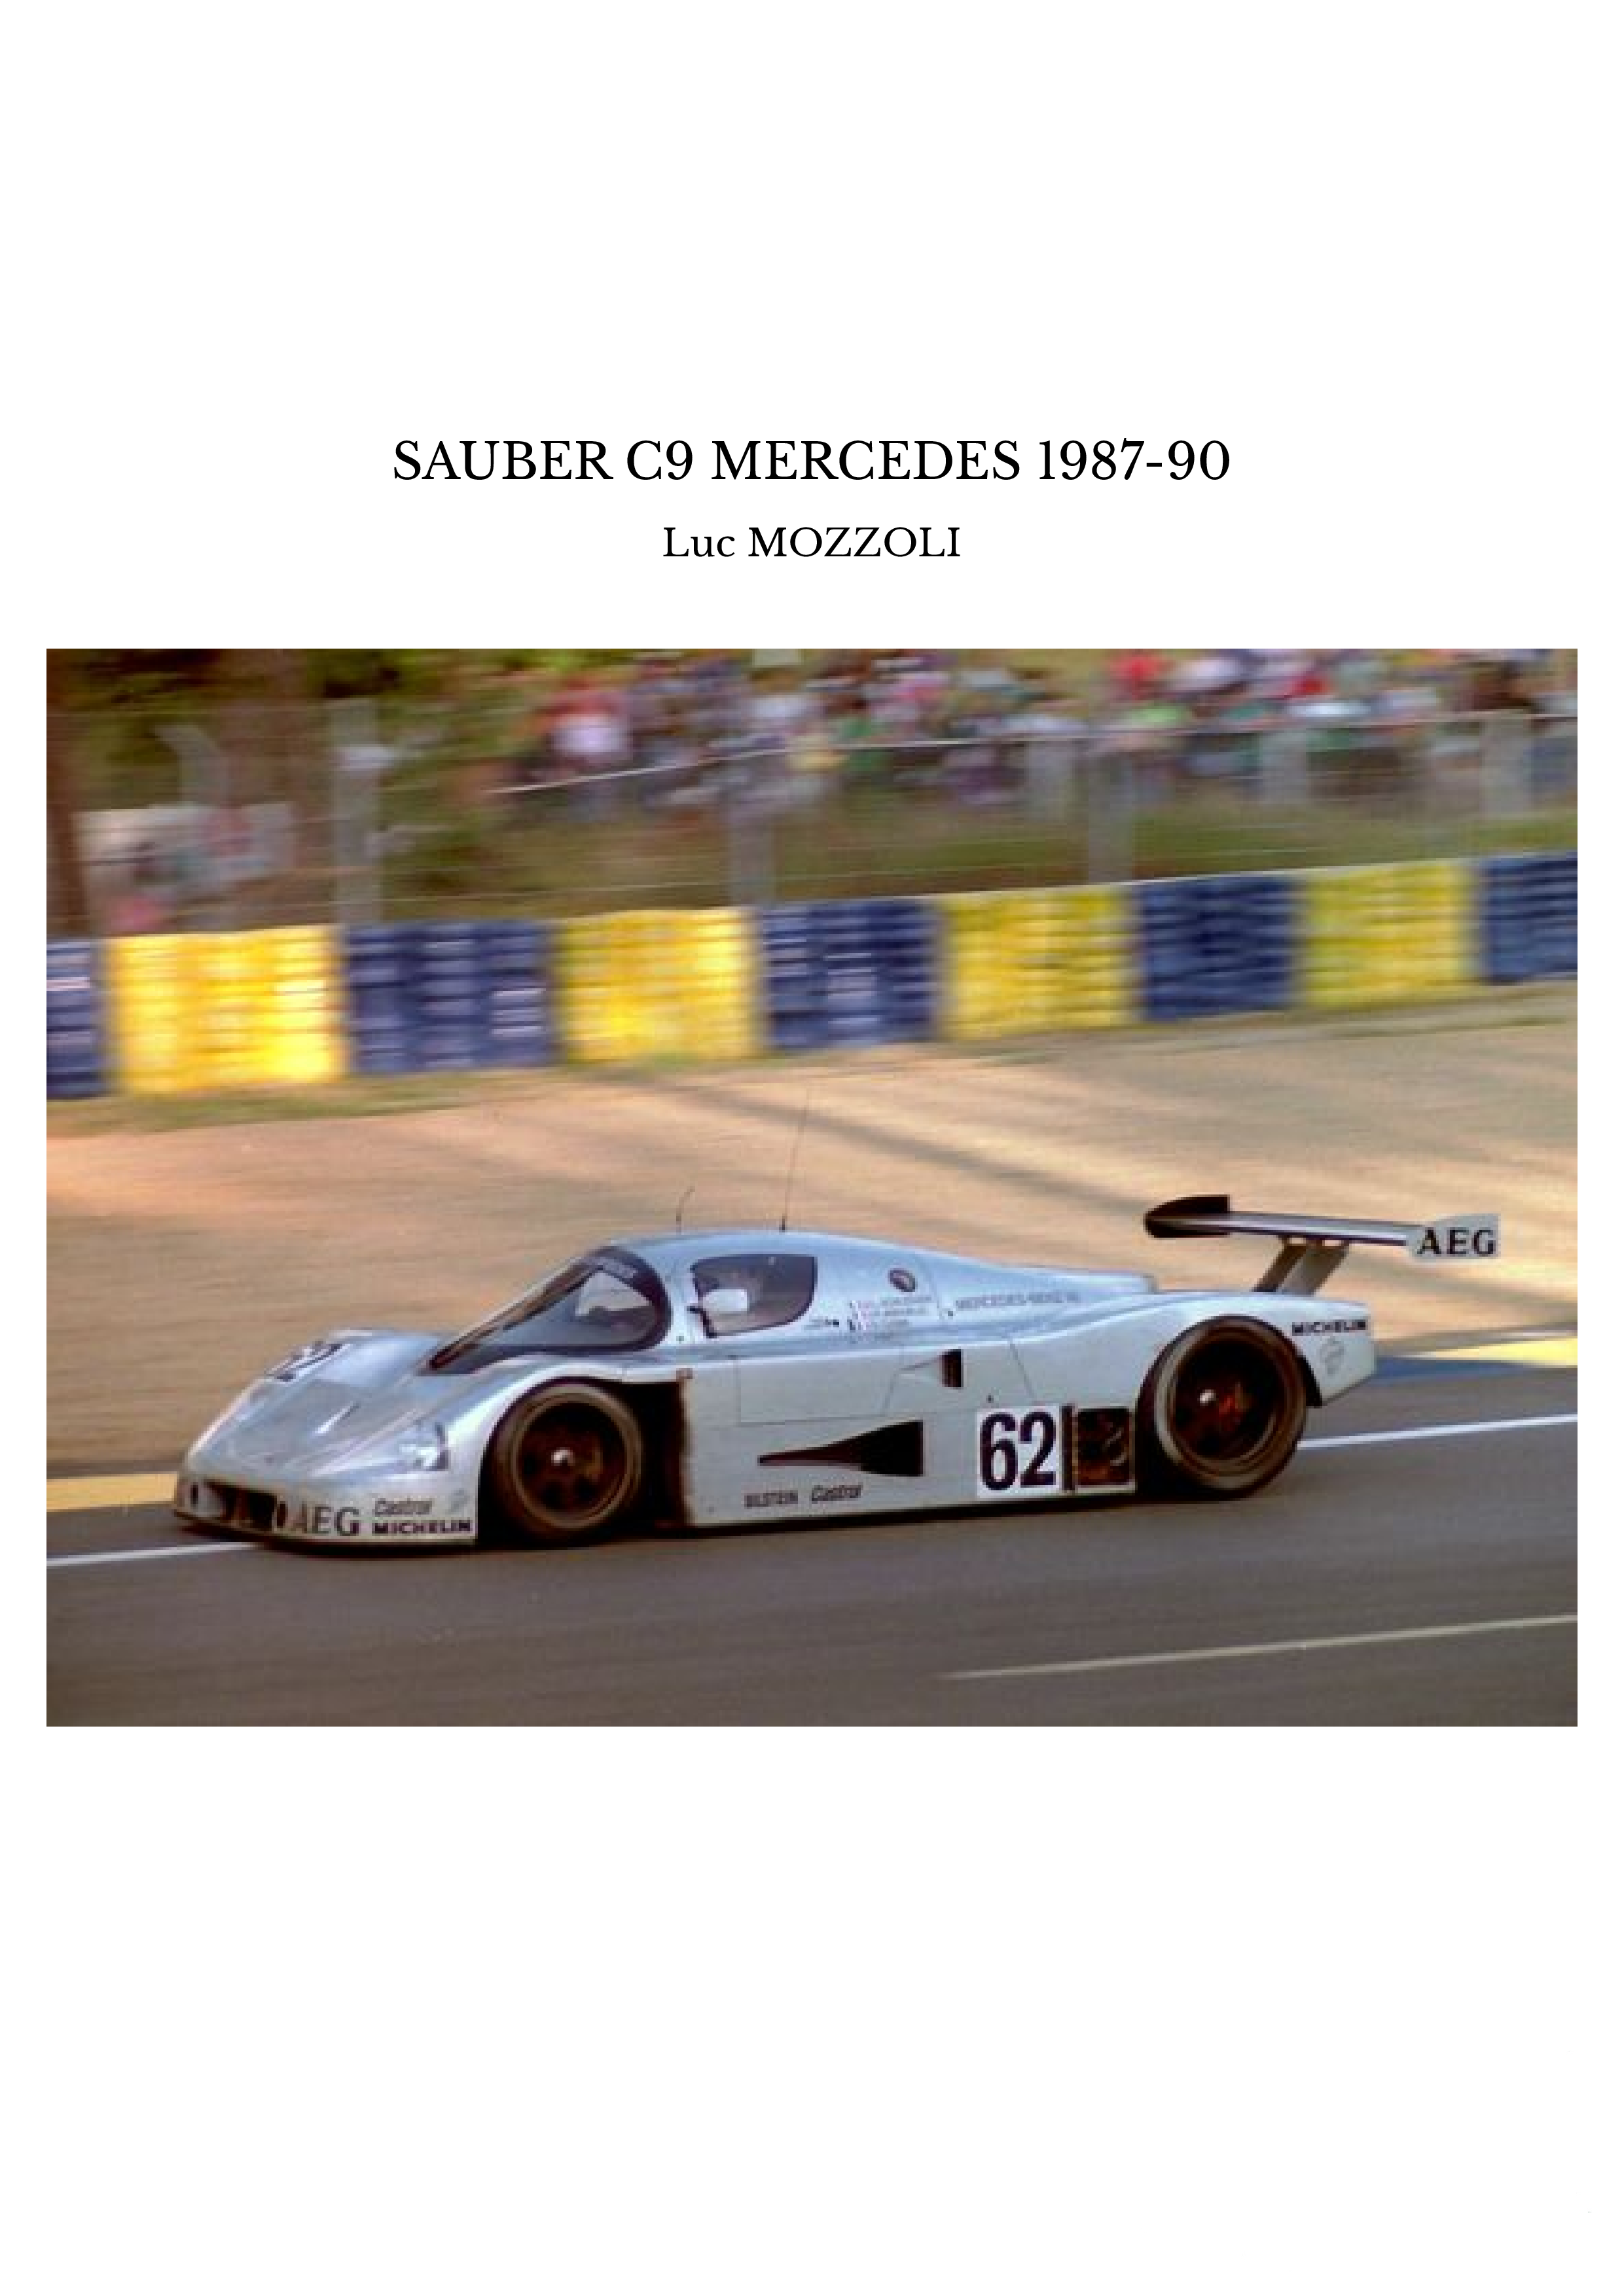 SAUBER C9 MERCEDES 1987-90